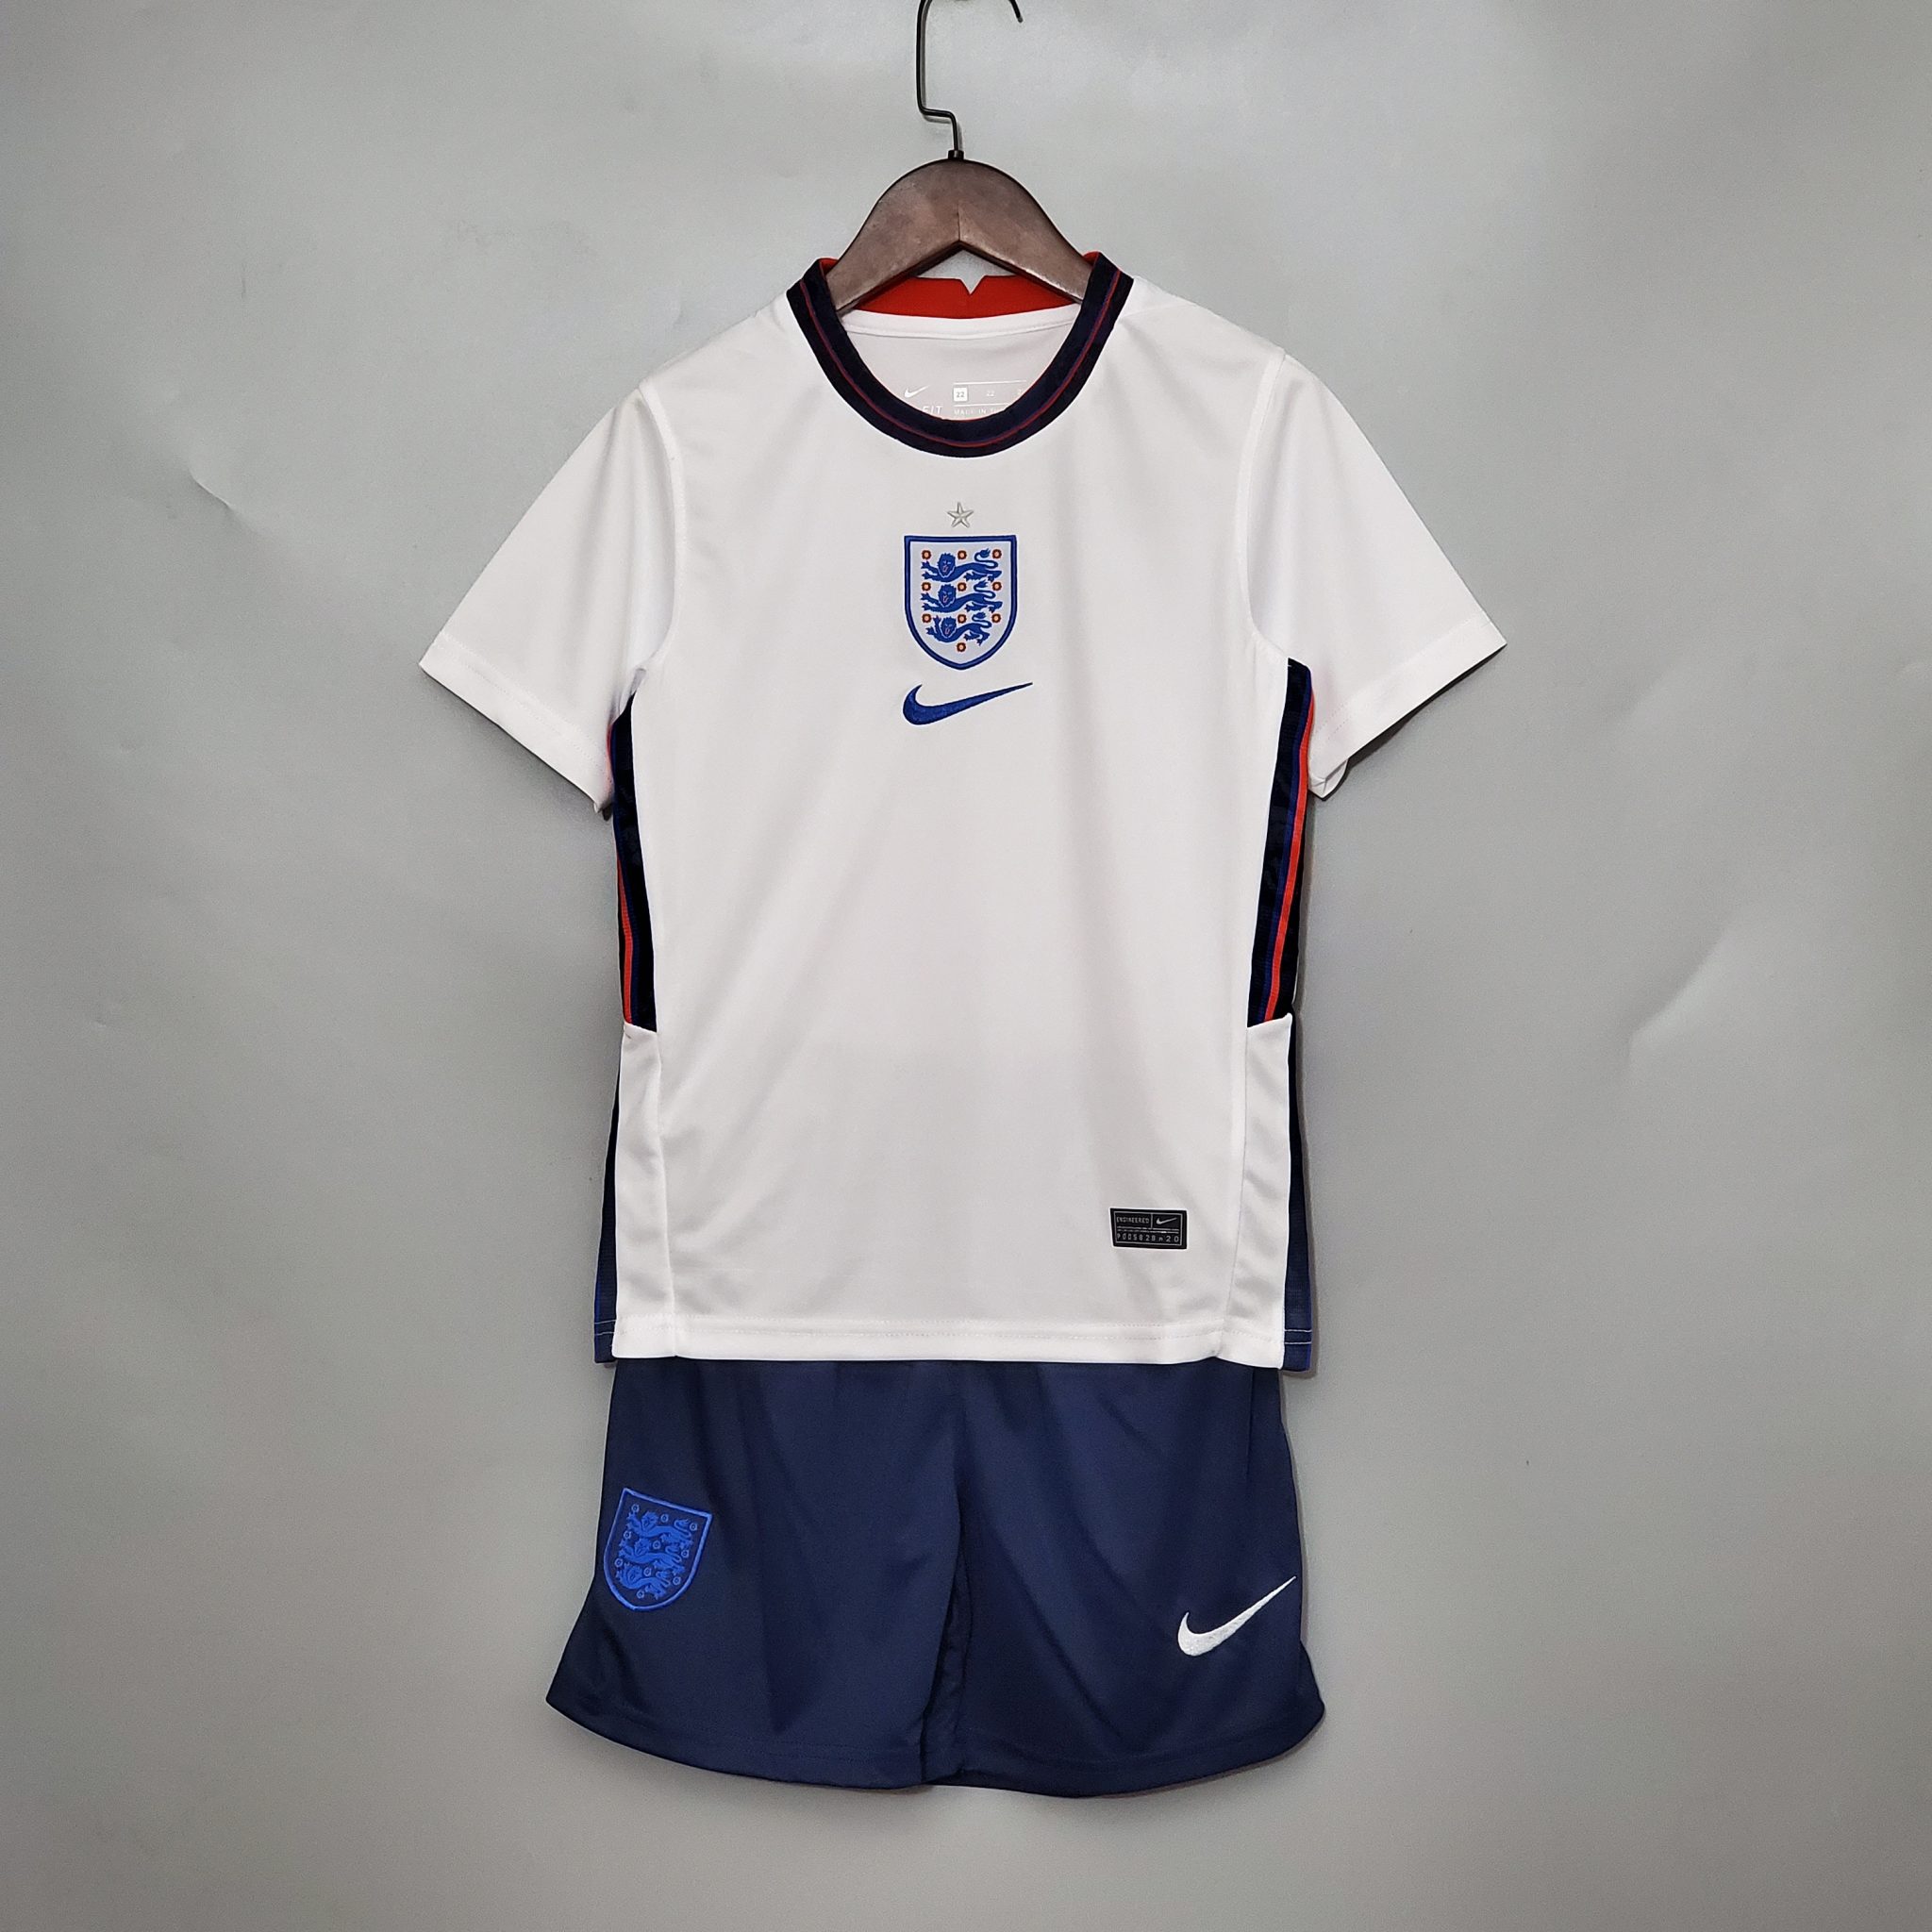 Kids England 2020 Euro Kit Bargain Football Shirts